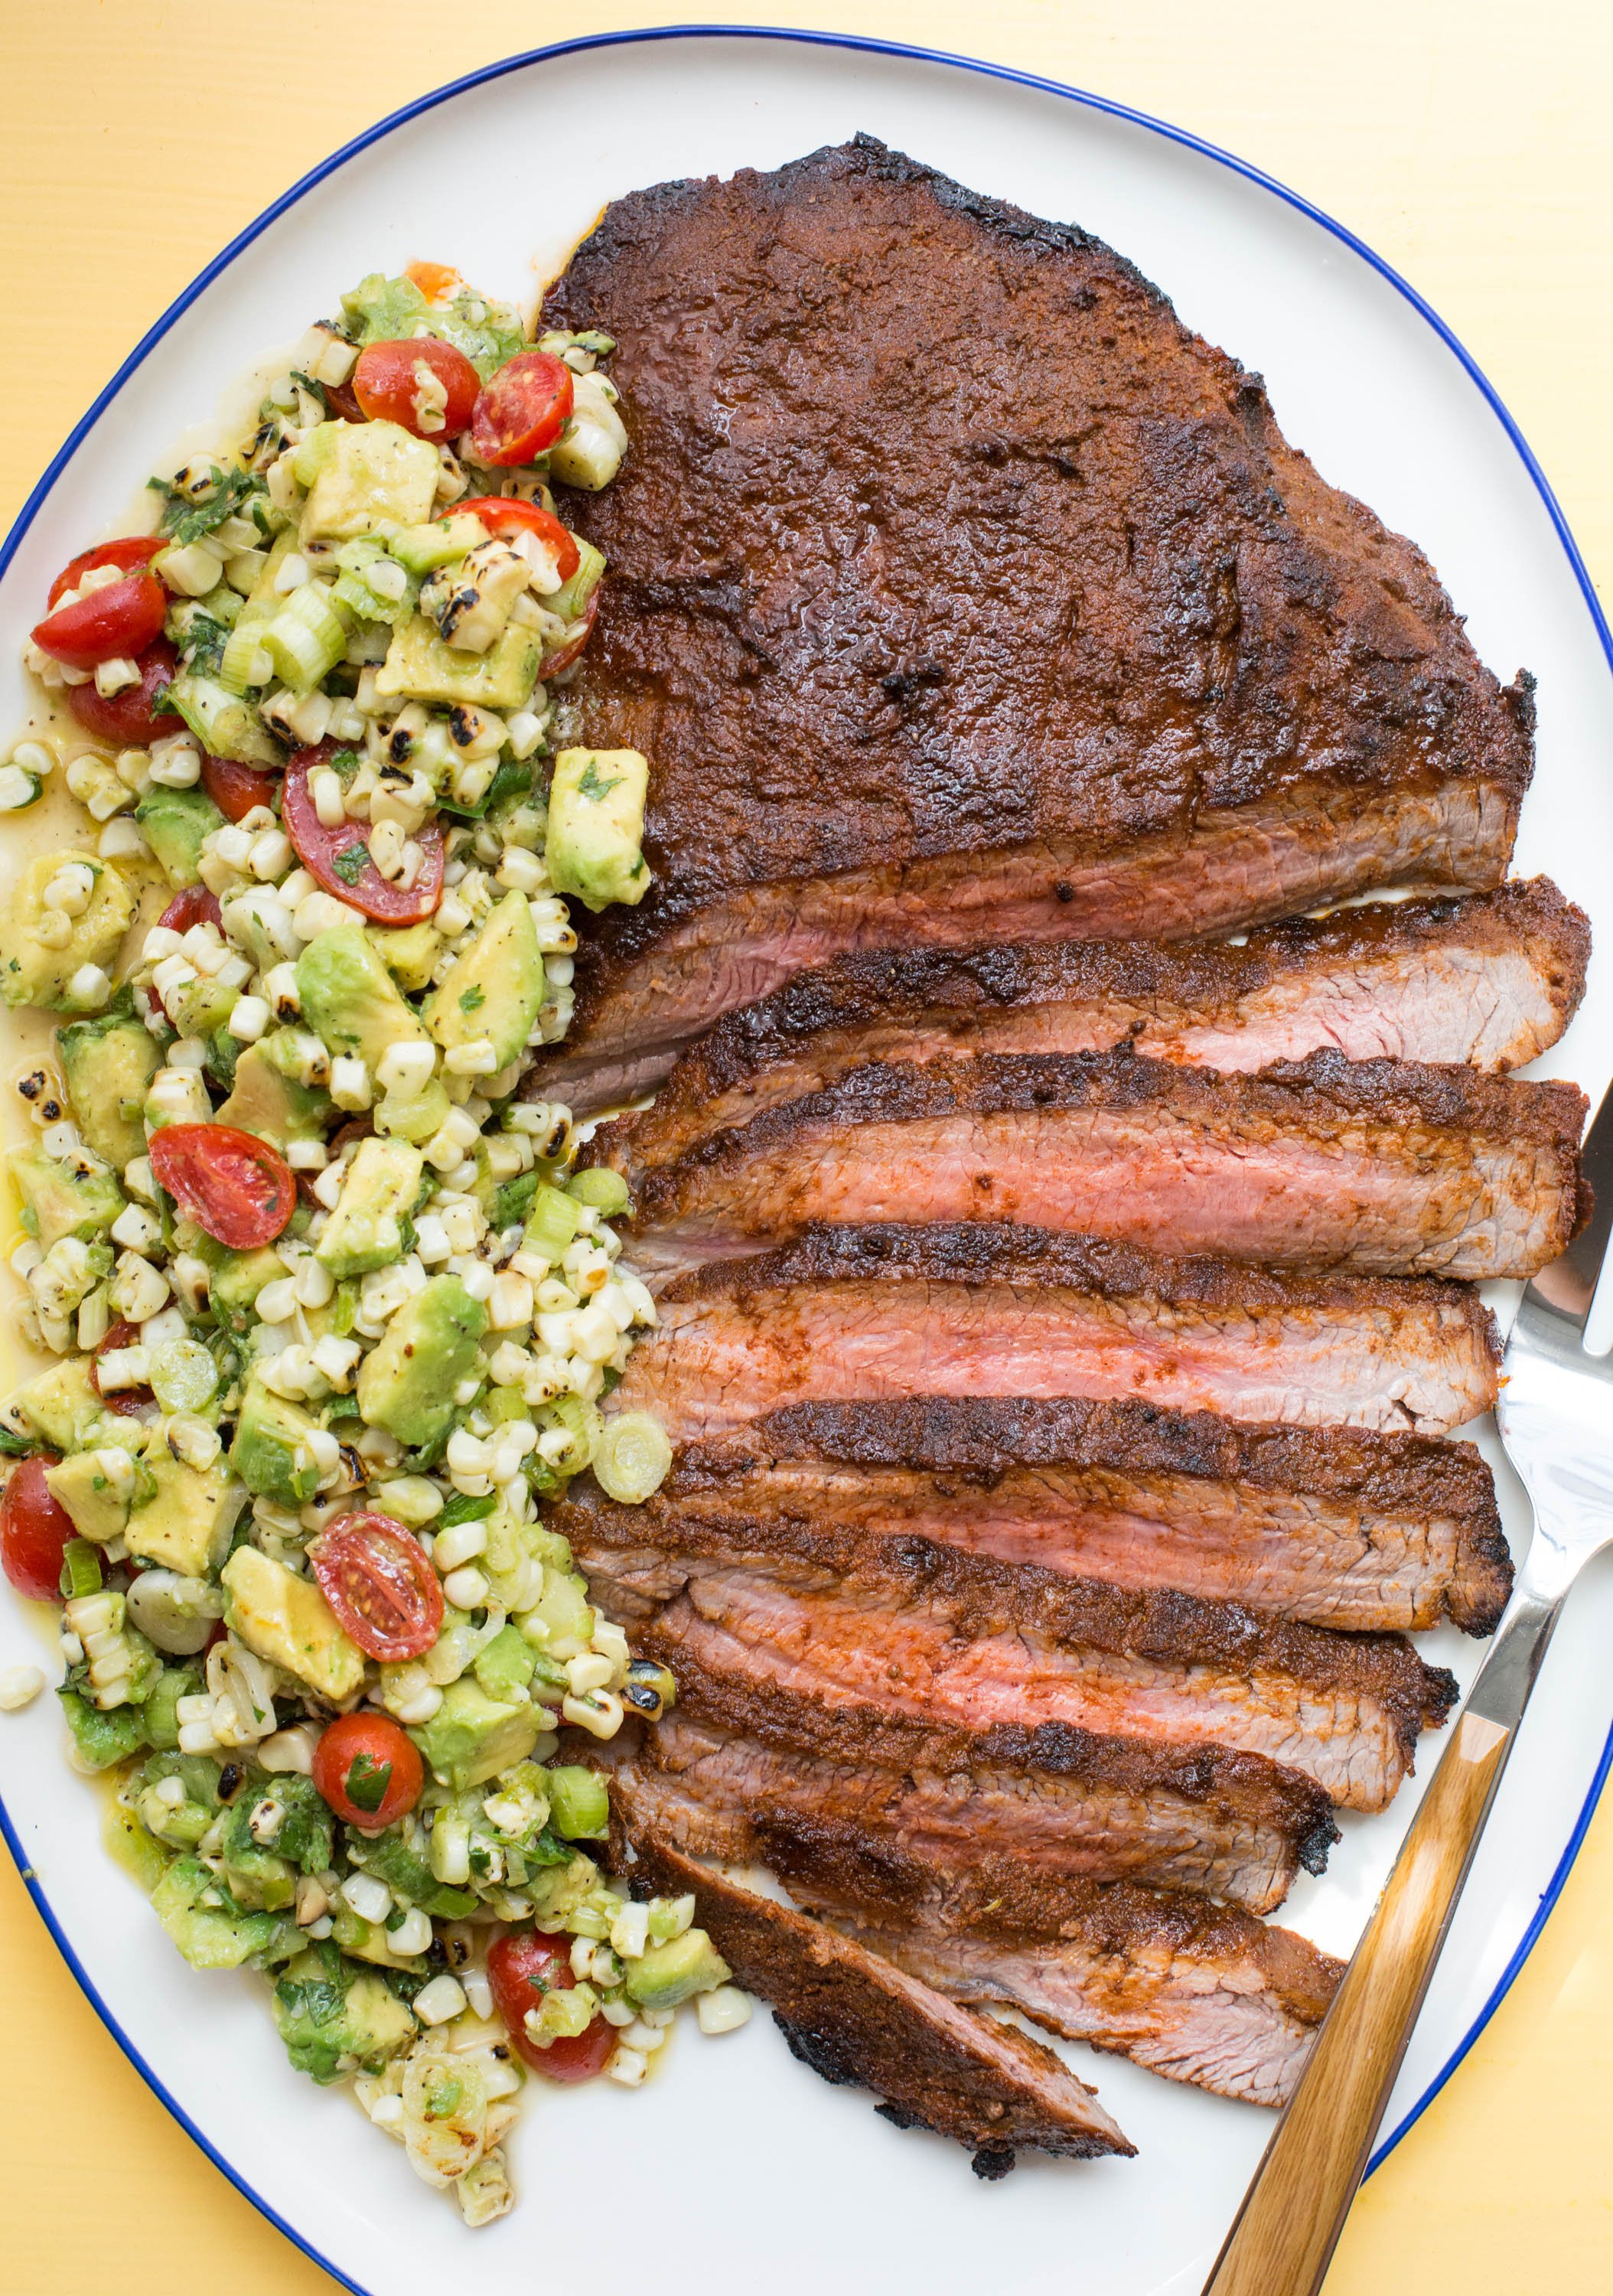 Chili Rubbed Flank Steak with Corn, Tomato and Avocado Salad / Sarah Crowder / Katie Workman / themom100.com